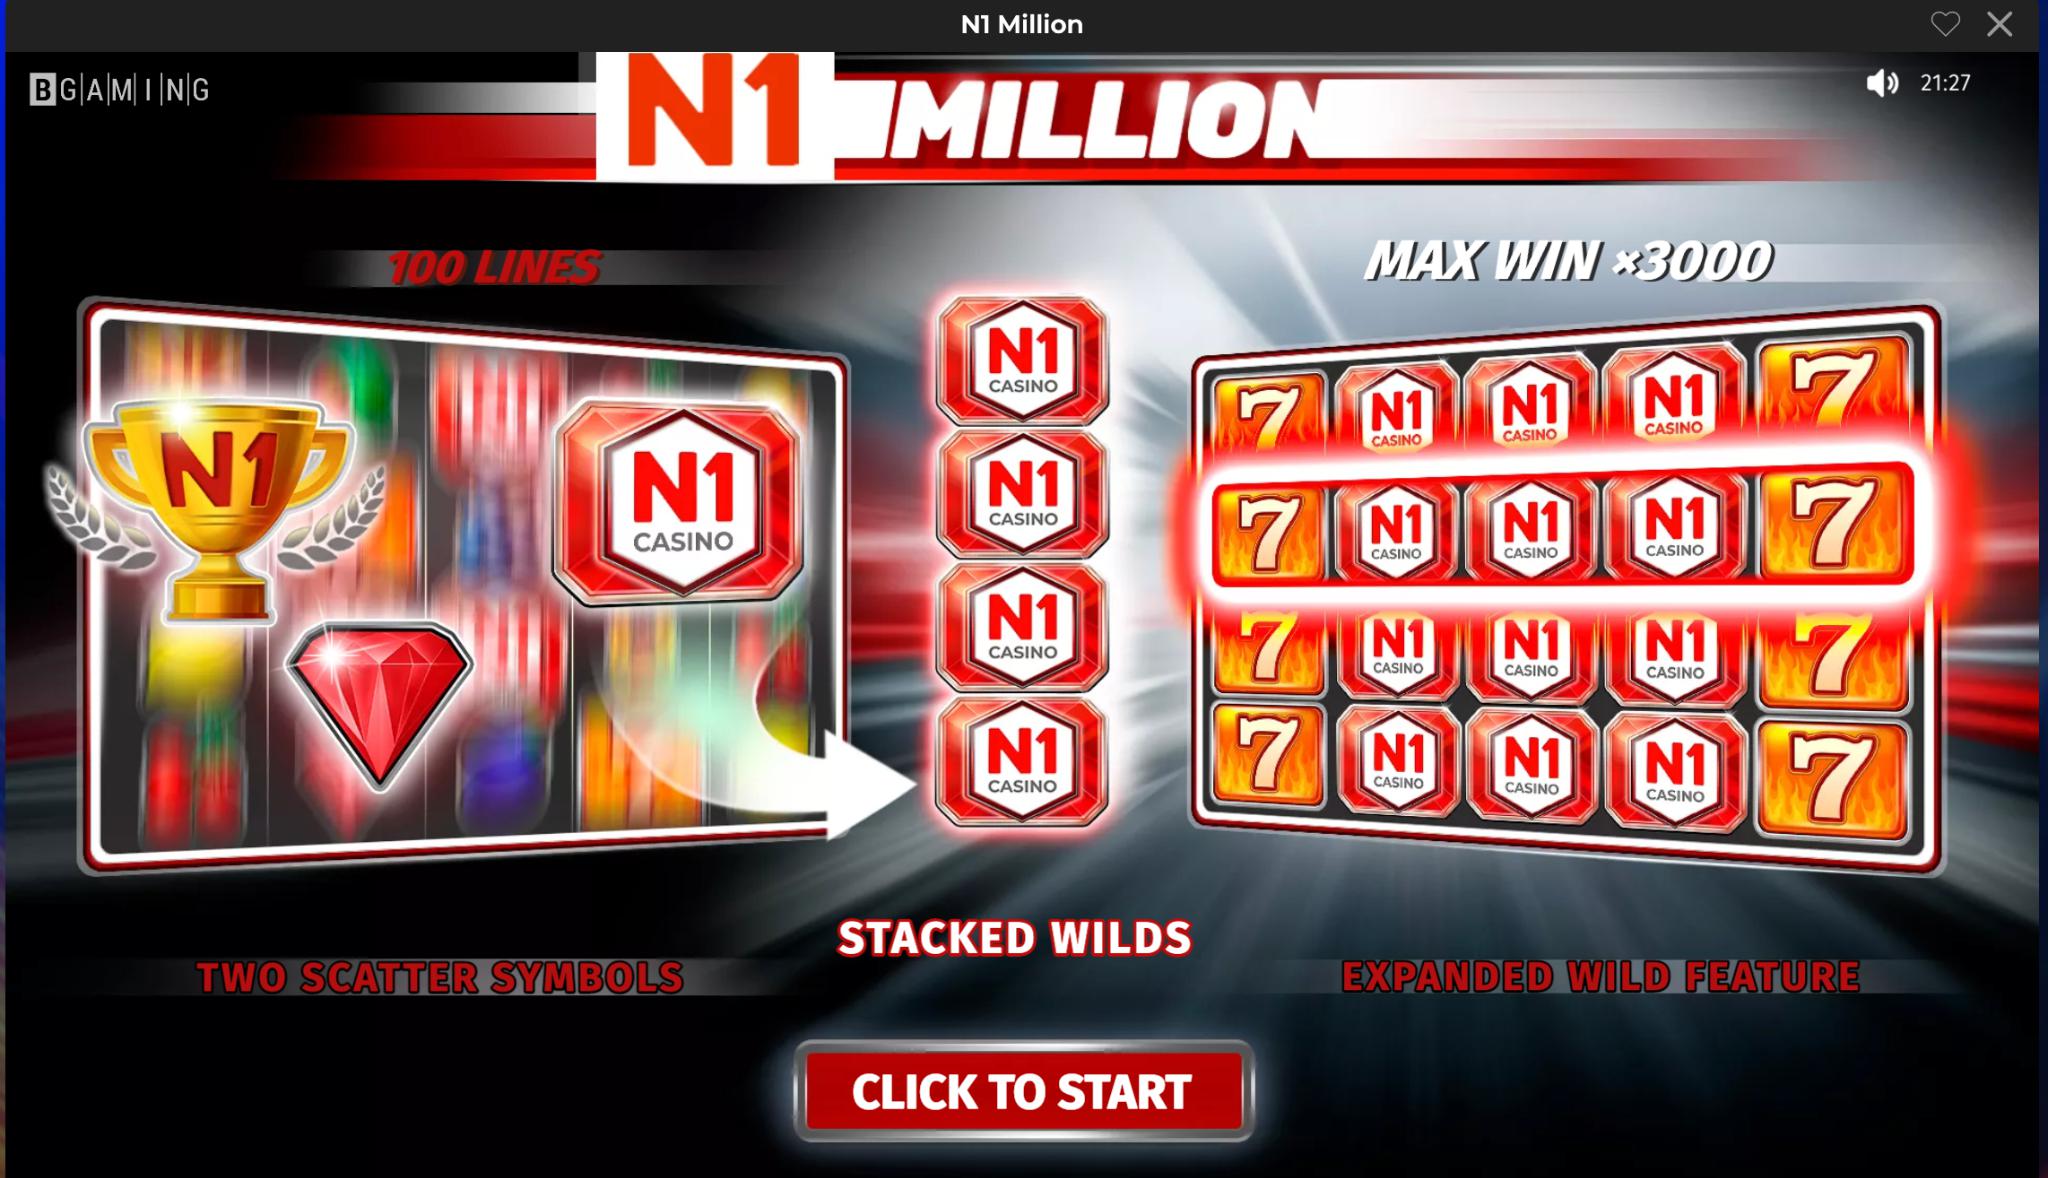 N1 Casino Million